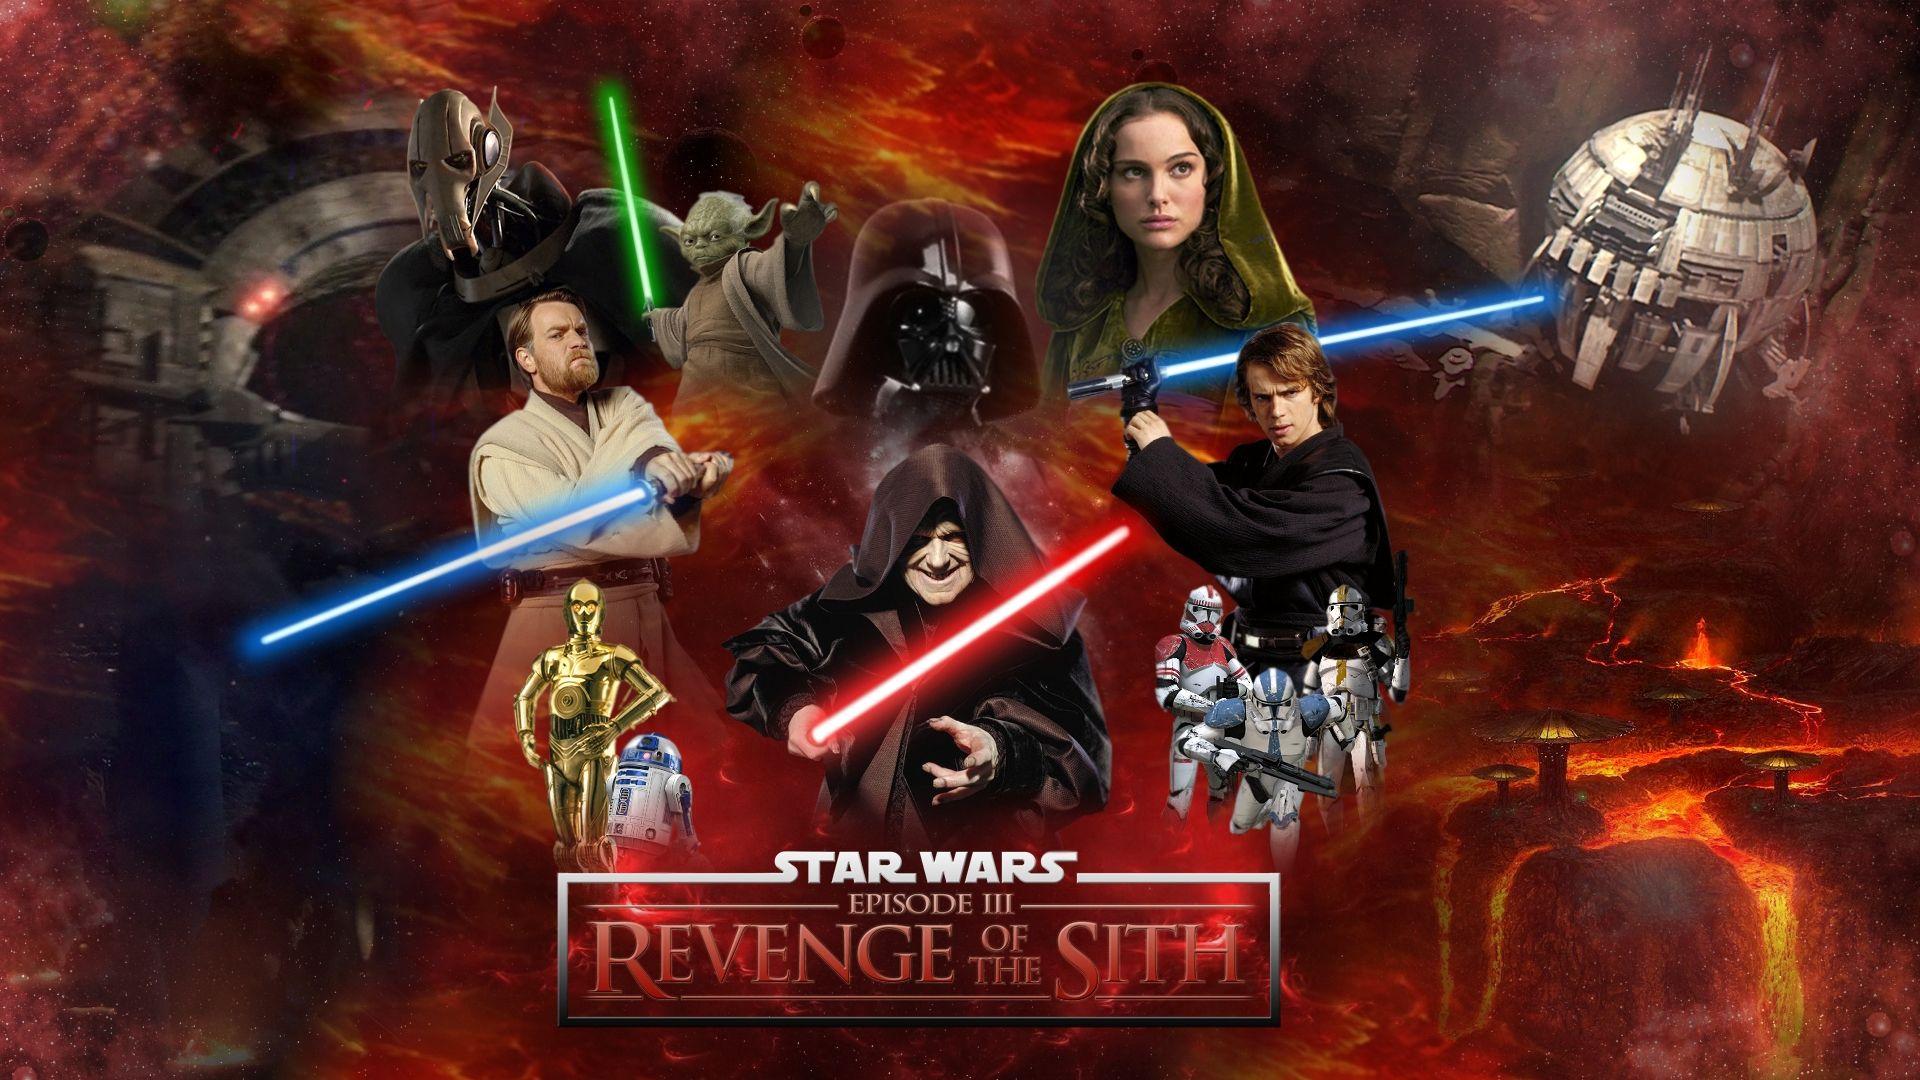 Star Wars: Episode III - Revenge of the Sith Wallpapers.